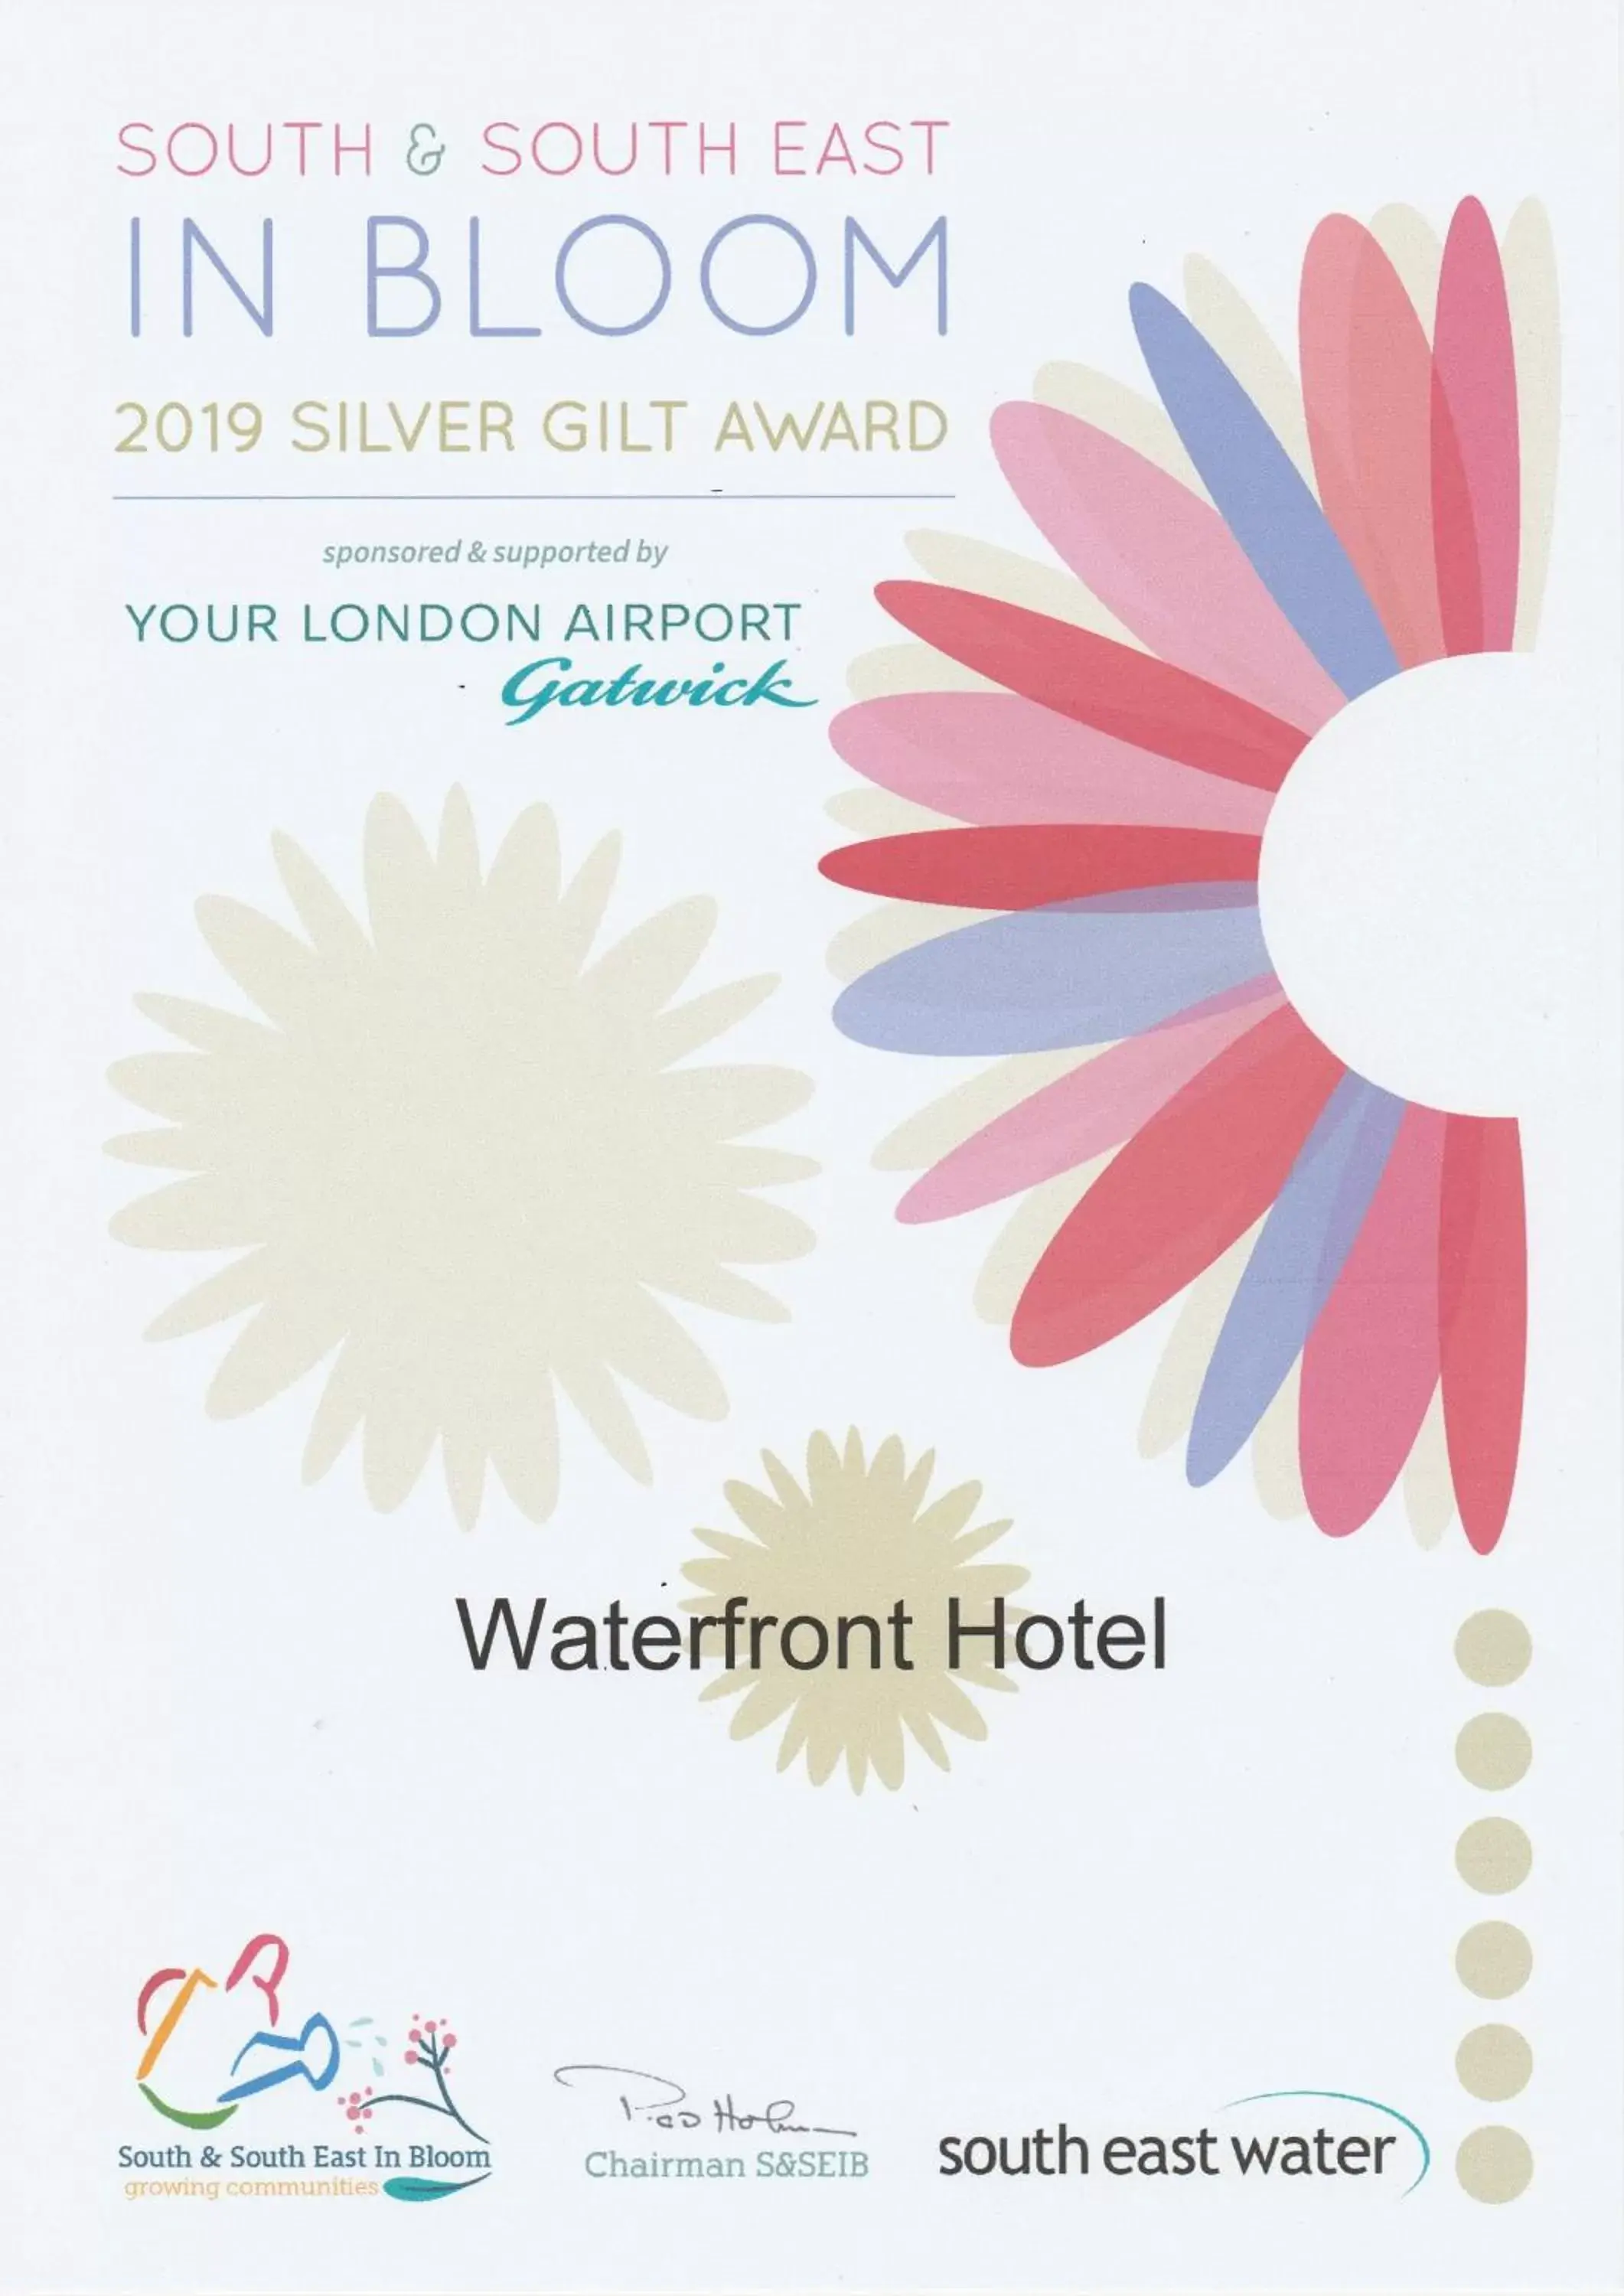 Certificate/Award in Waterfront Hotel